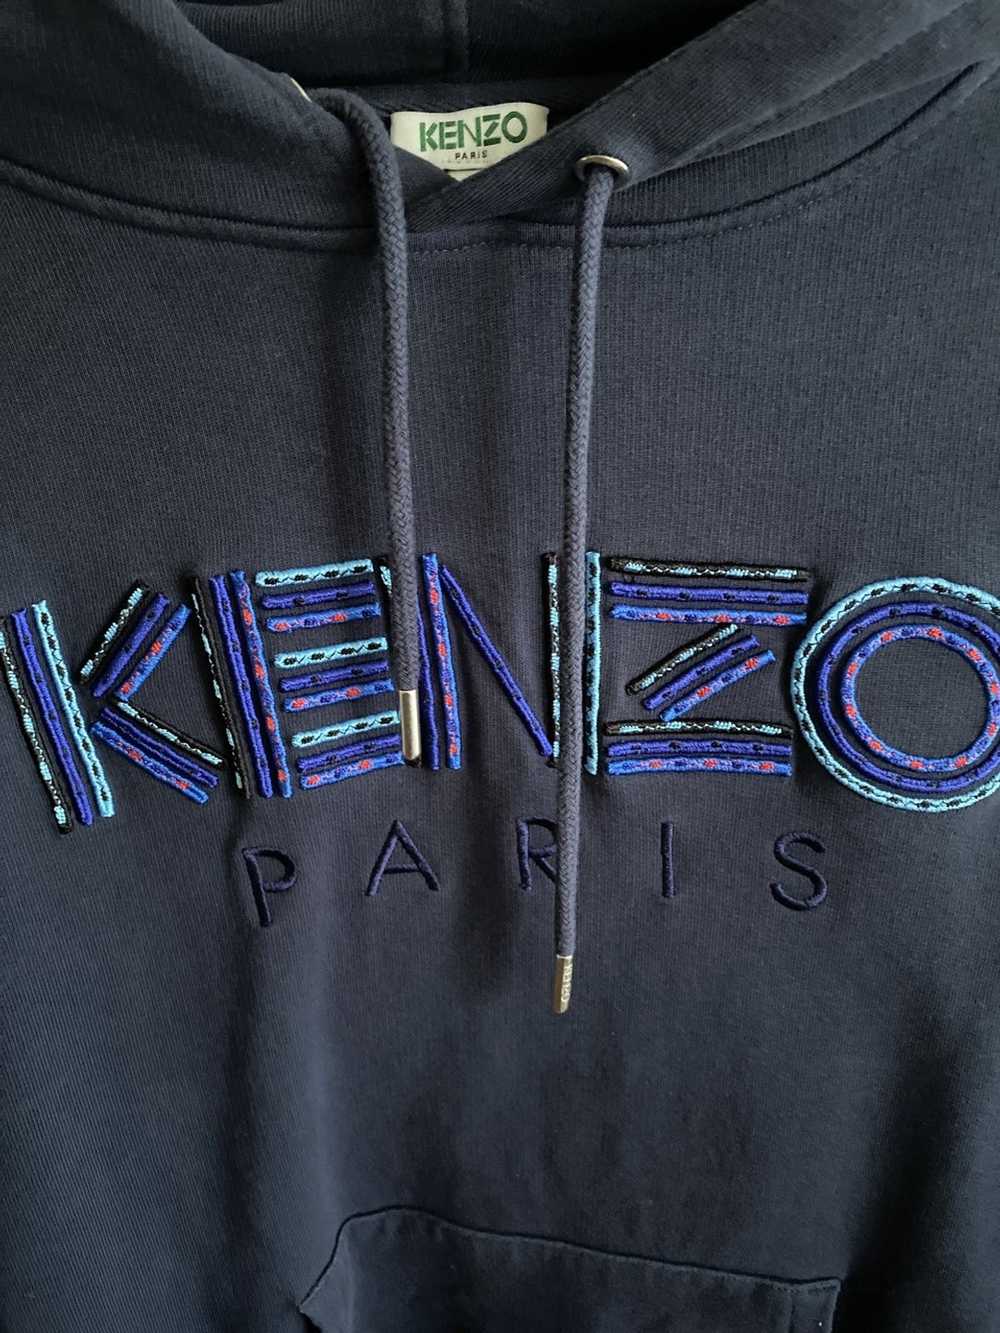 Kenzo Kenzo Paris logo hoodie - image 2